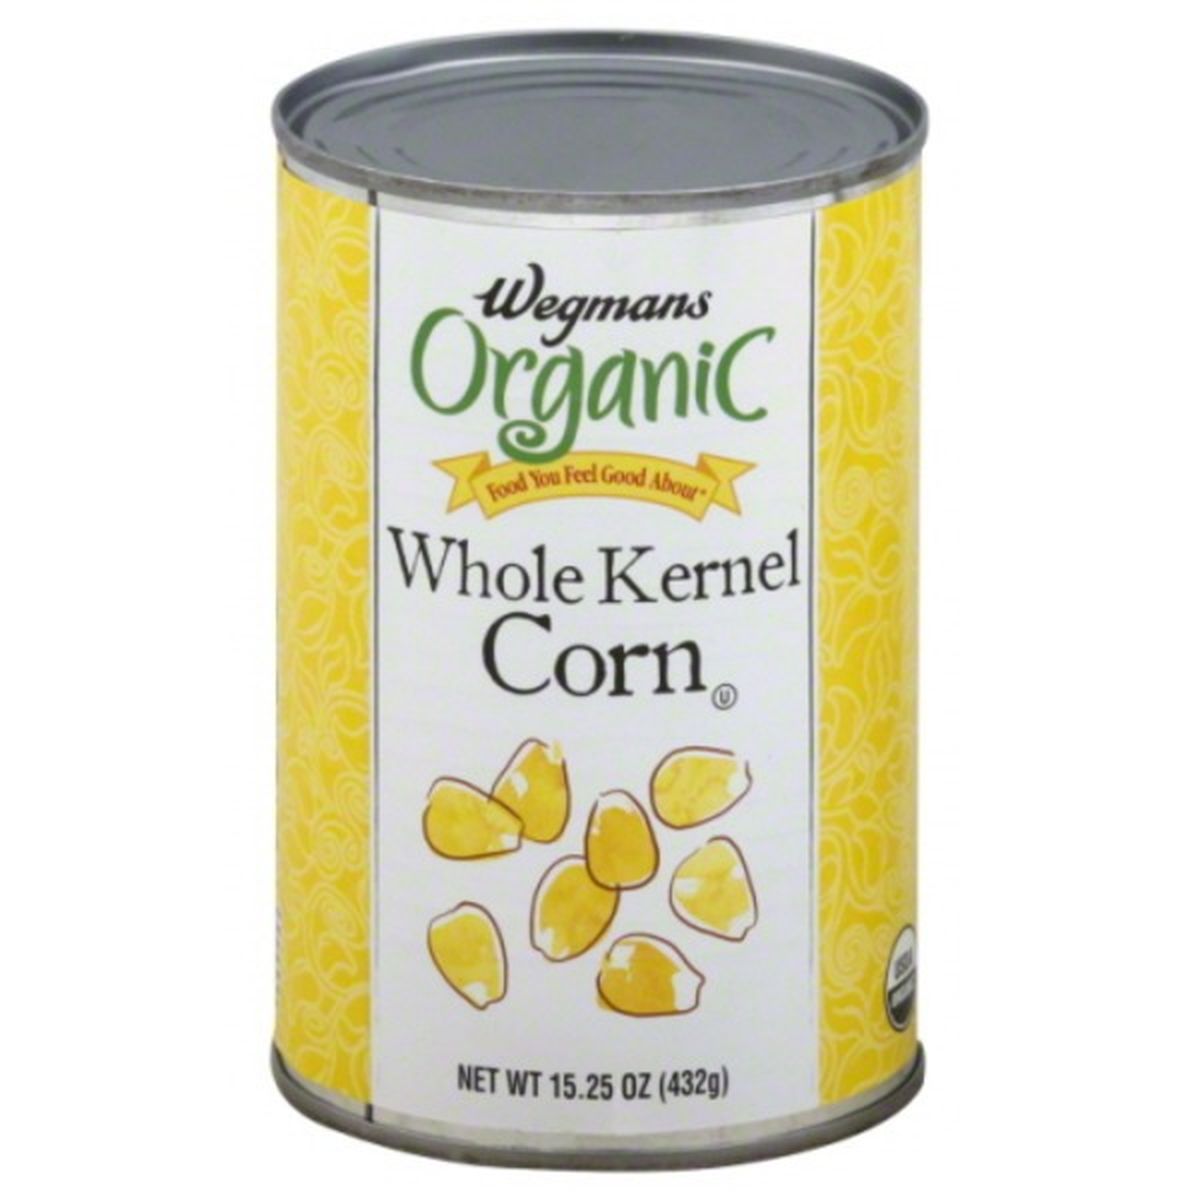 Calories in Wegmans Organic Corn, Whole Kernel